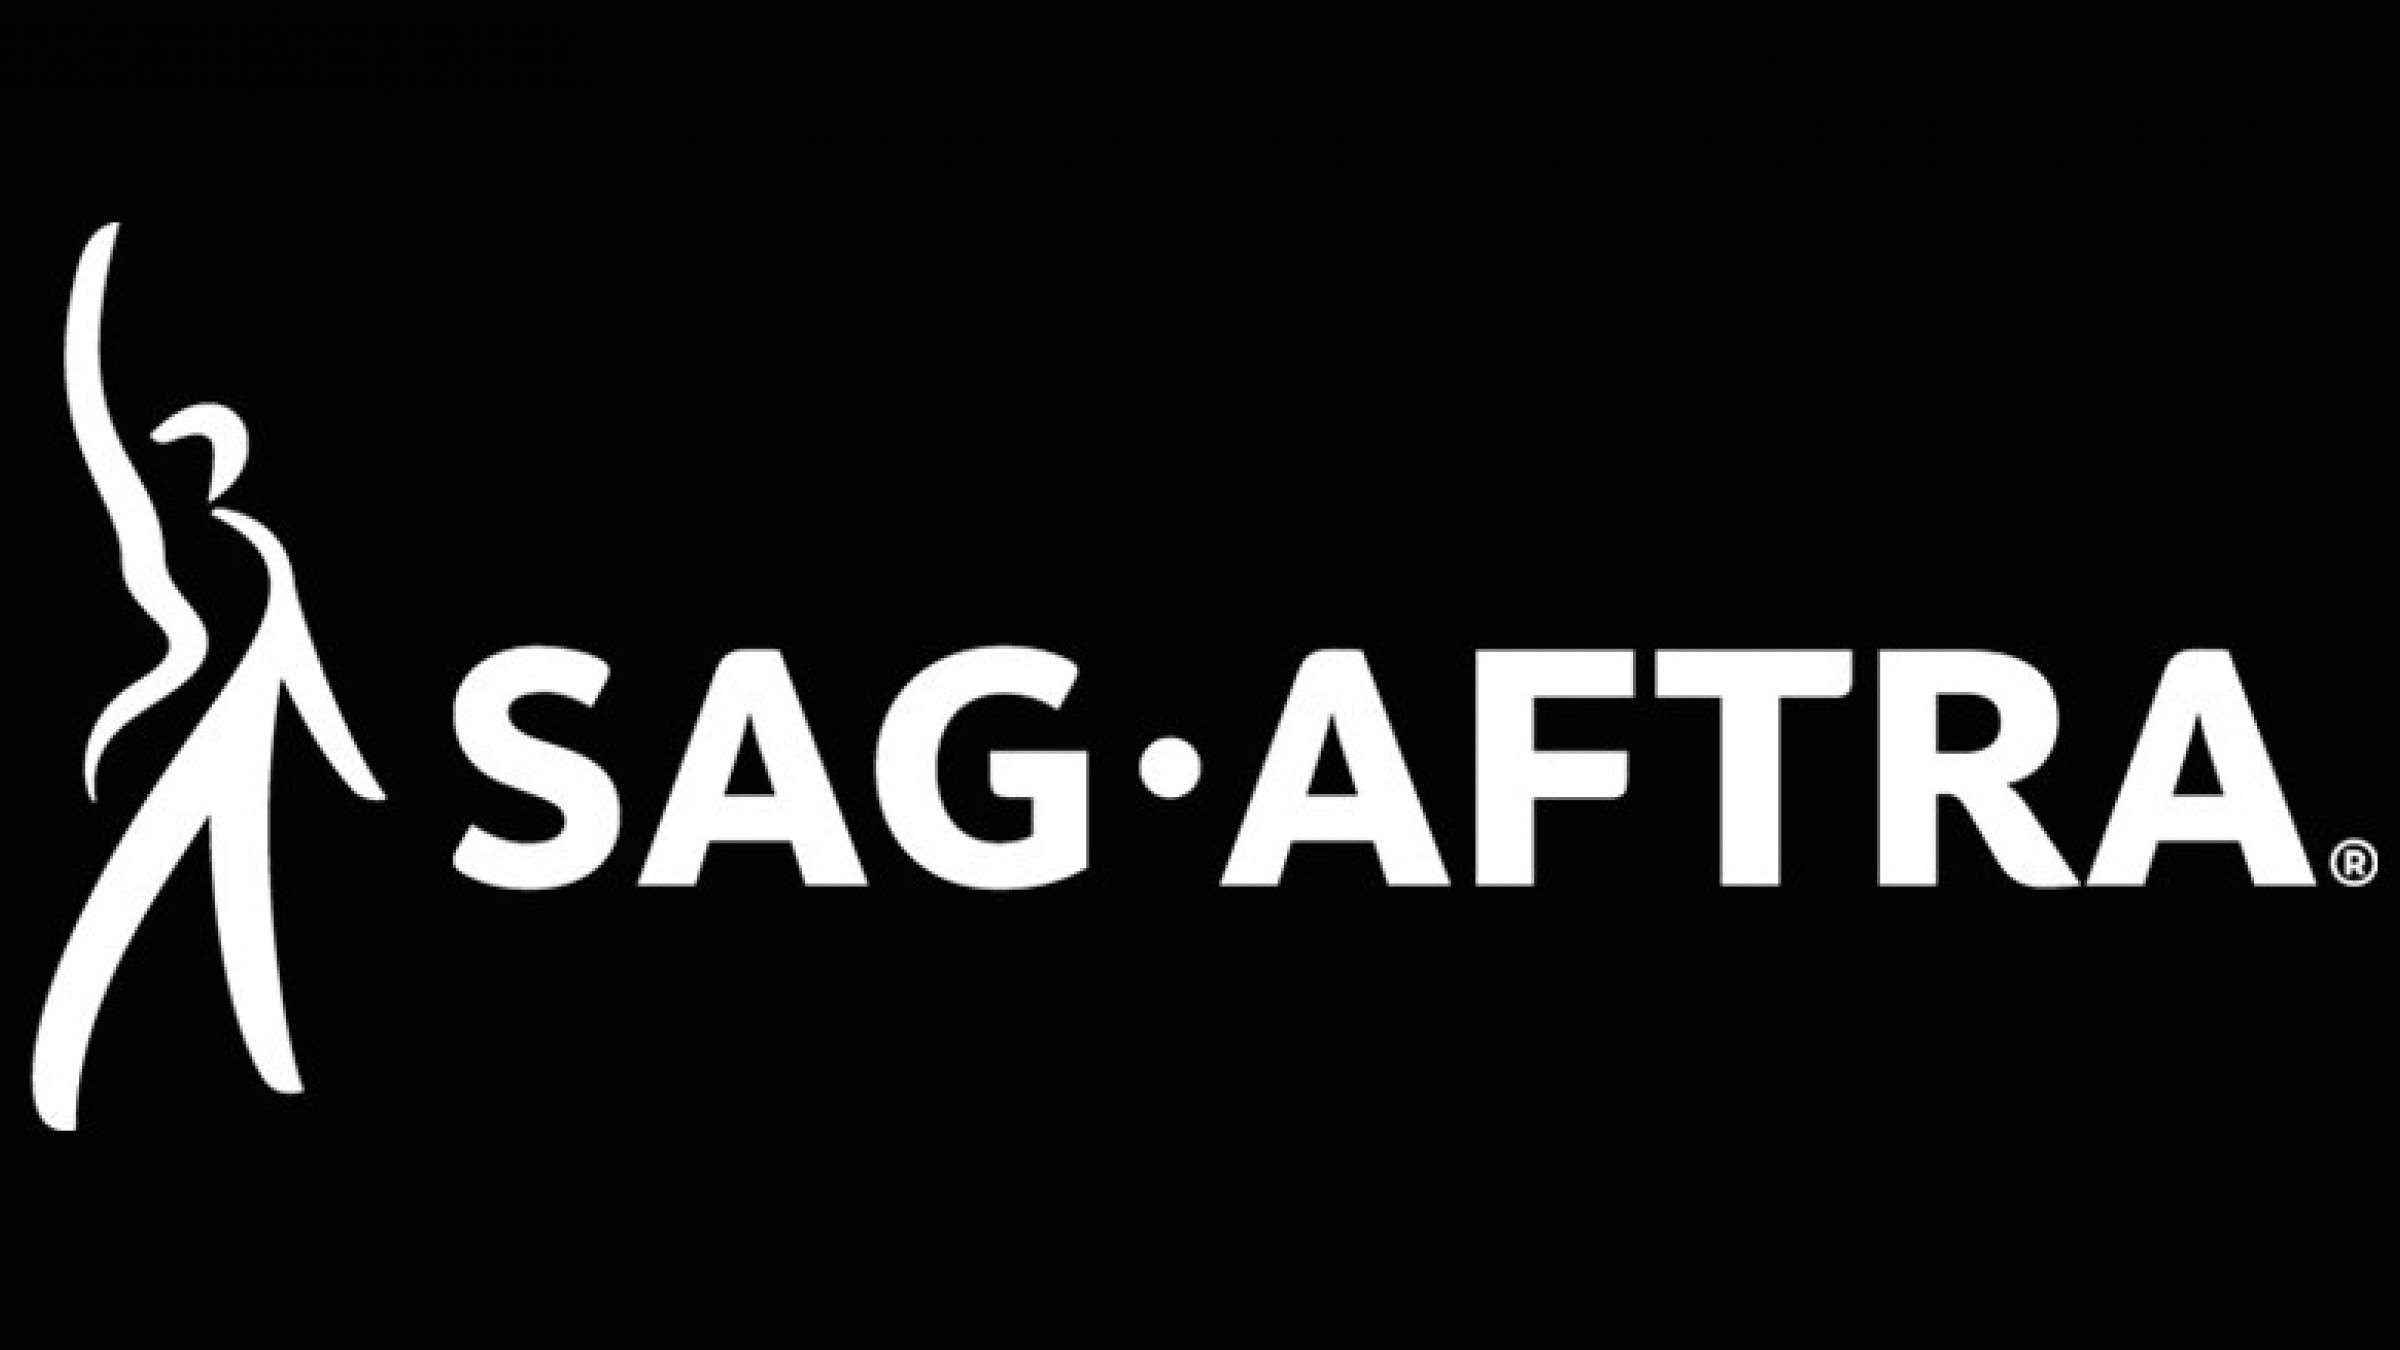 SAG-AFTRA Logos